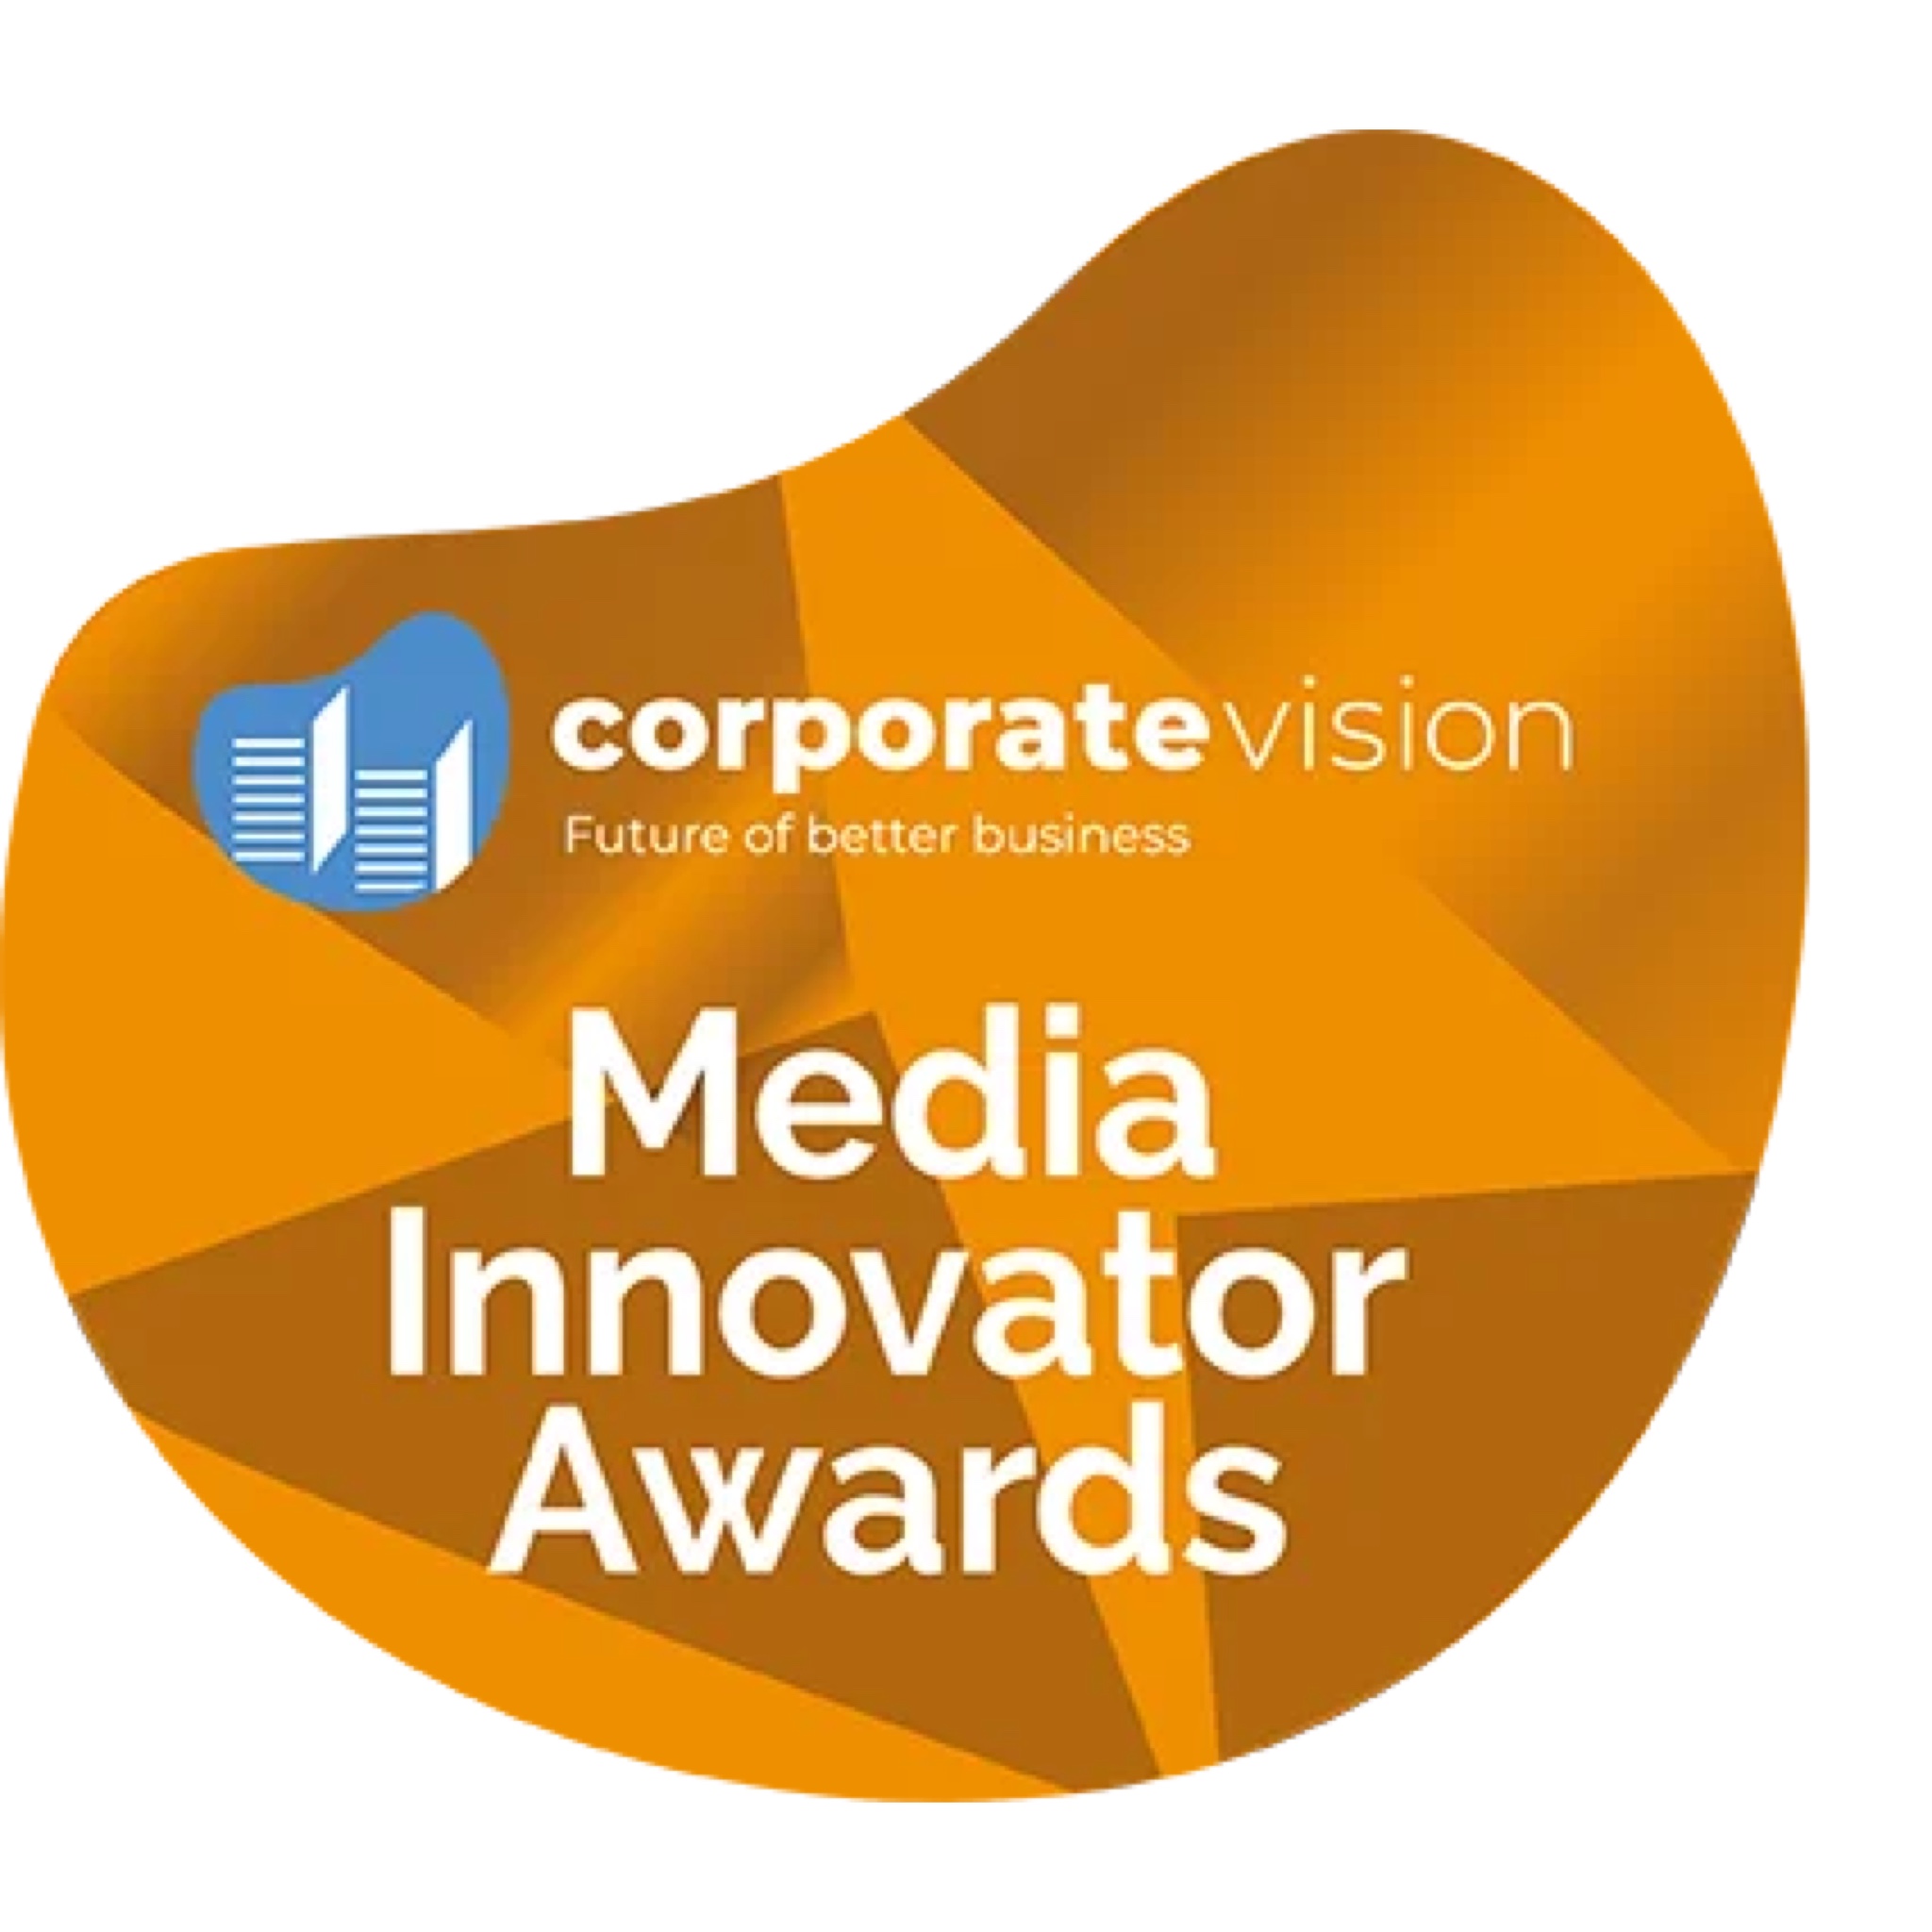 United States 营销公司 Altered State Productions 获得了 Media Innovator Awards - Corporate Vision 奖项